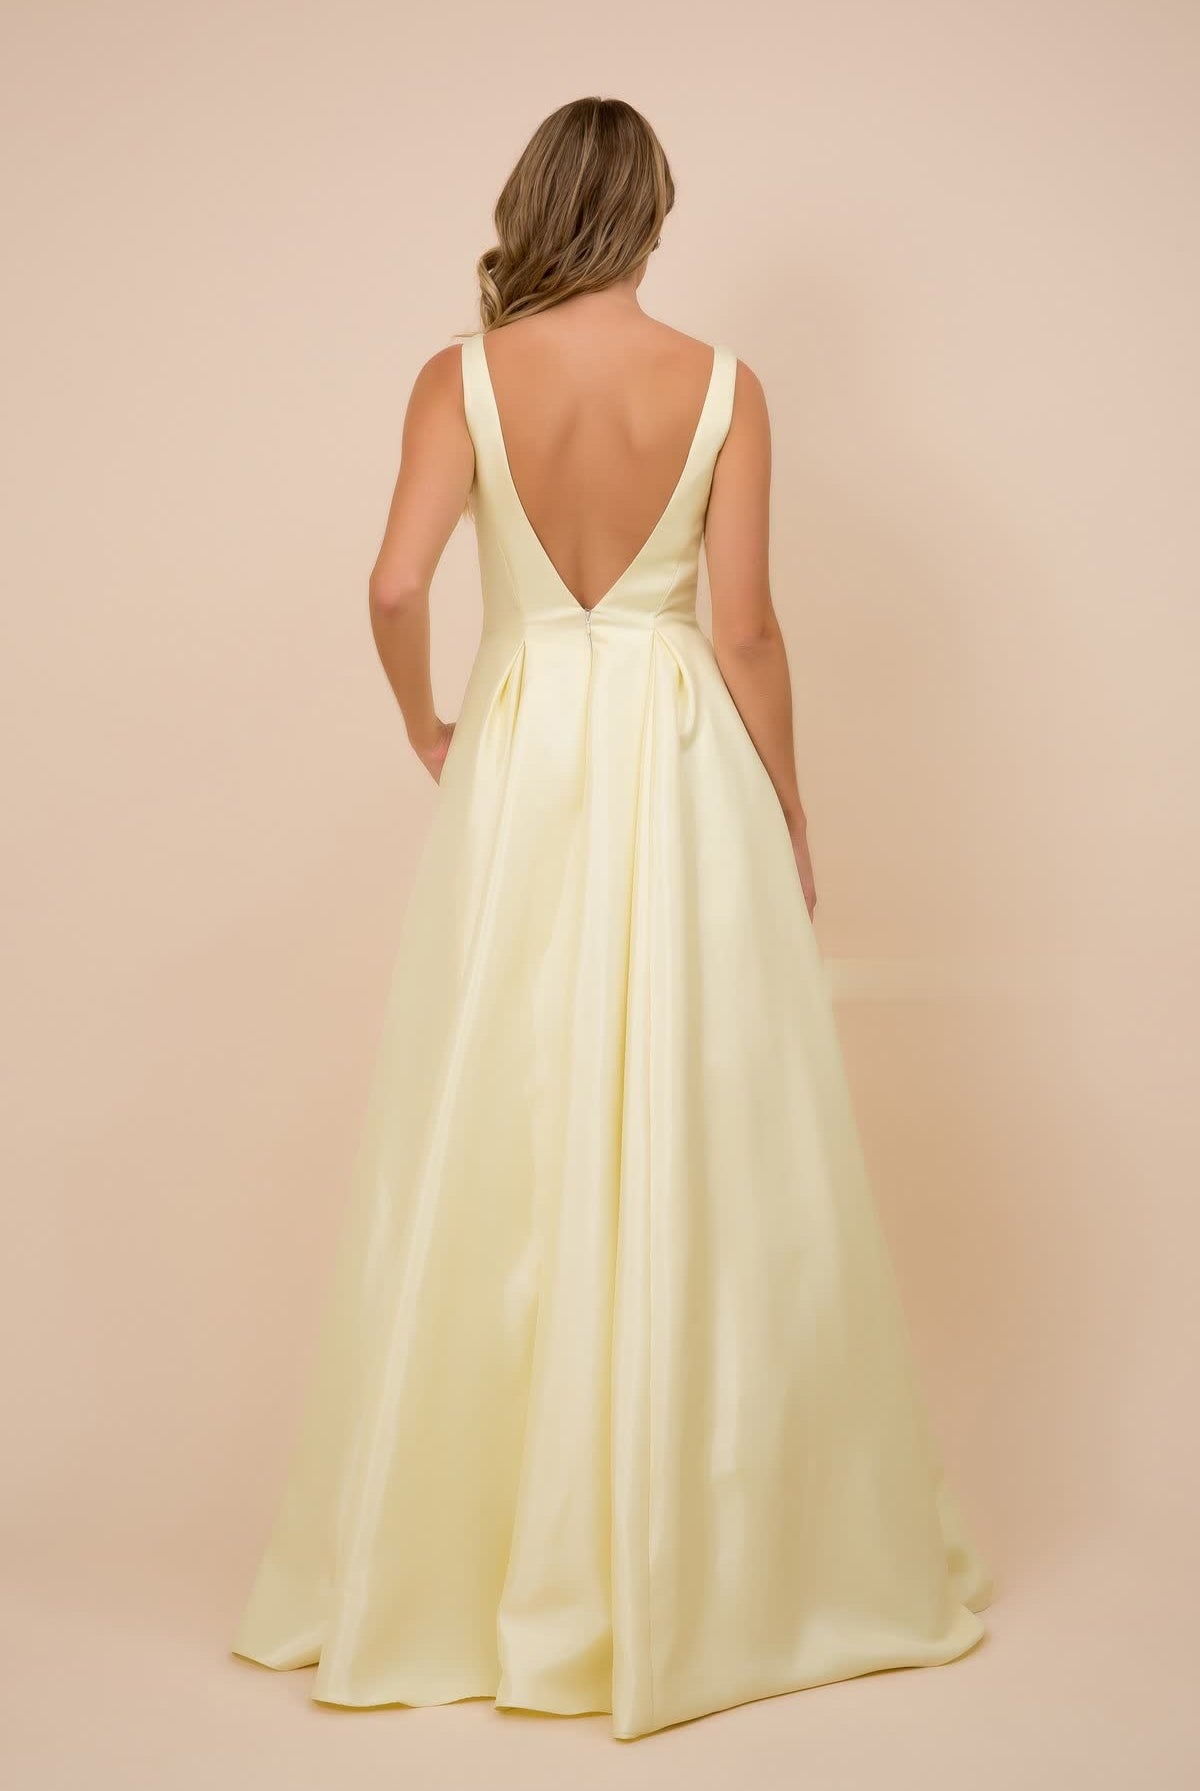 A-Line Sheer Side Cut Outs Open Back Long Prom Dress NXE156P-Prom Dress-smcfashion.com